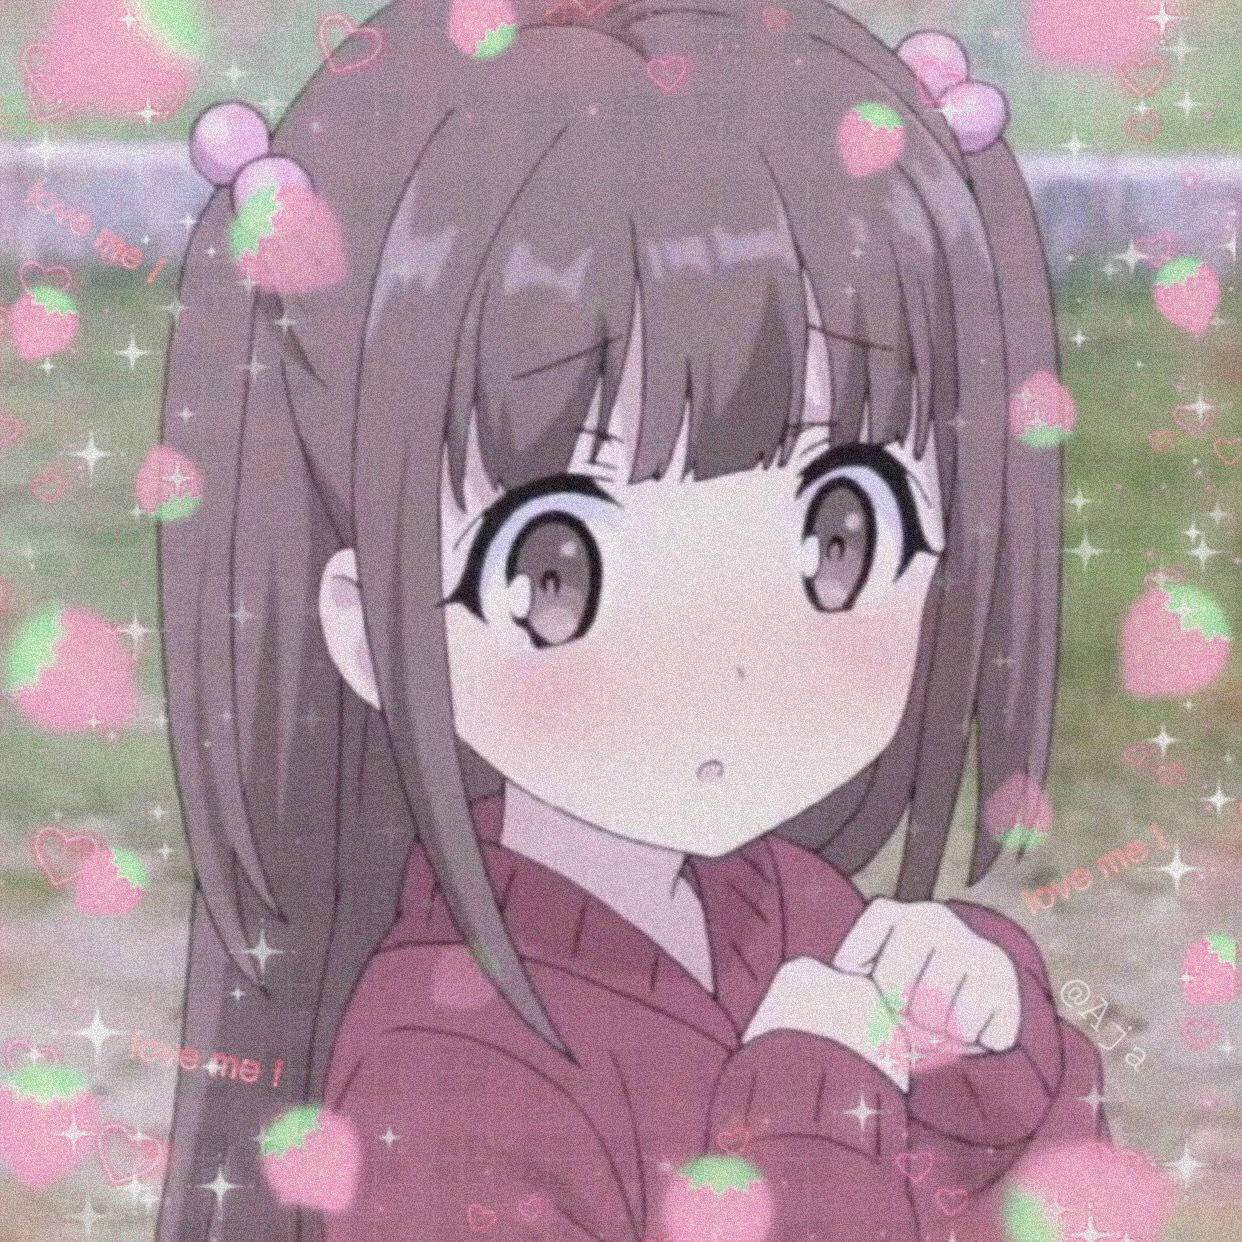 Free Cute Anime Girl Pfp Wallpaper Downloads, Cute Anime Girl Pfp Wallpaper for FREE